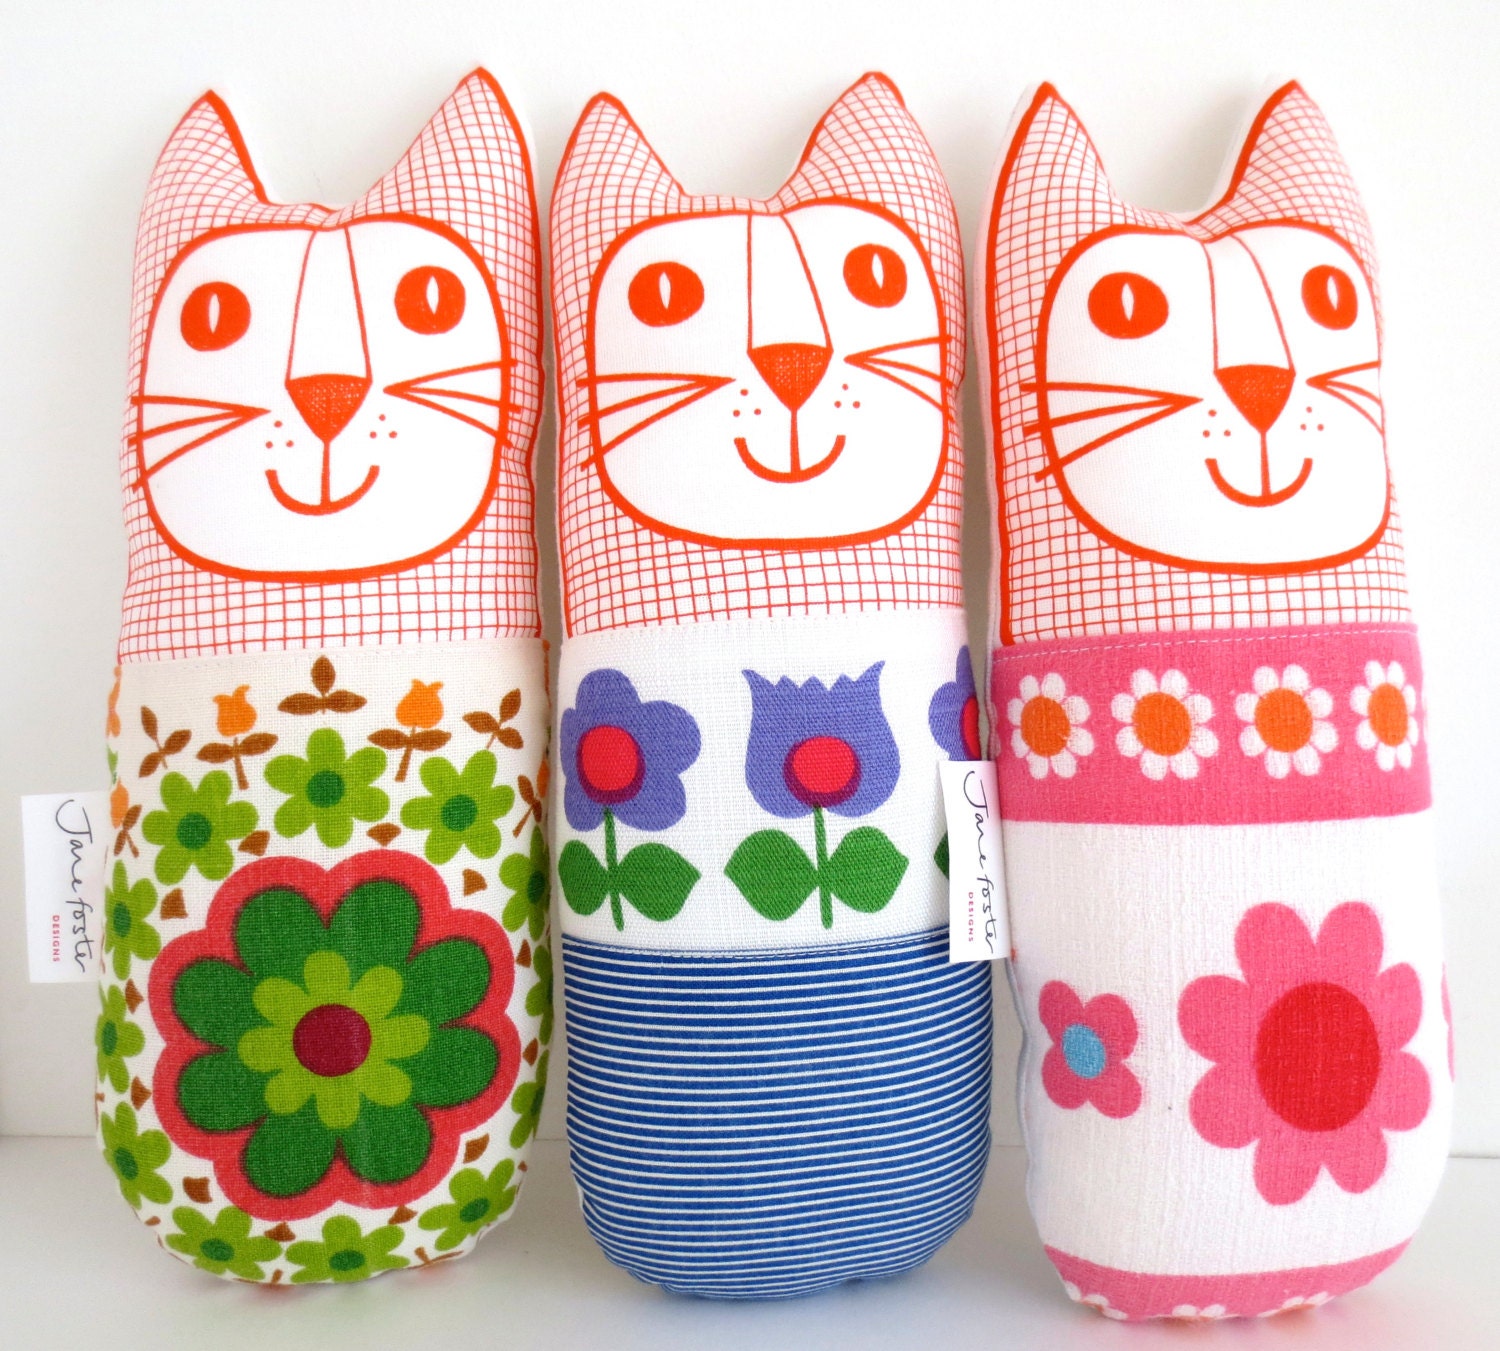 Original Scandinavian style 70s fabric handmade cat toy plush softie by Jane Foster